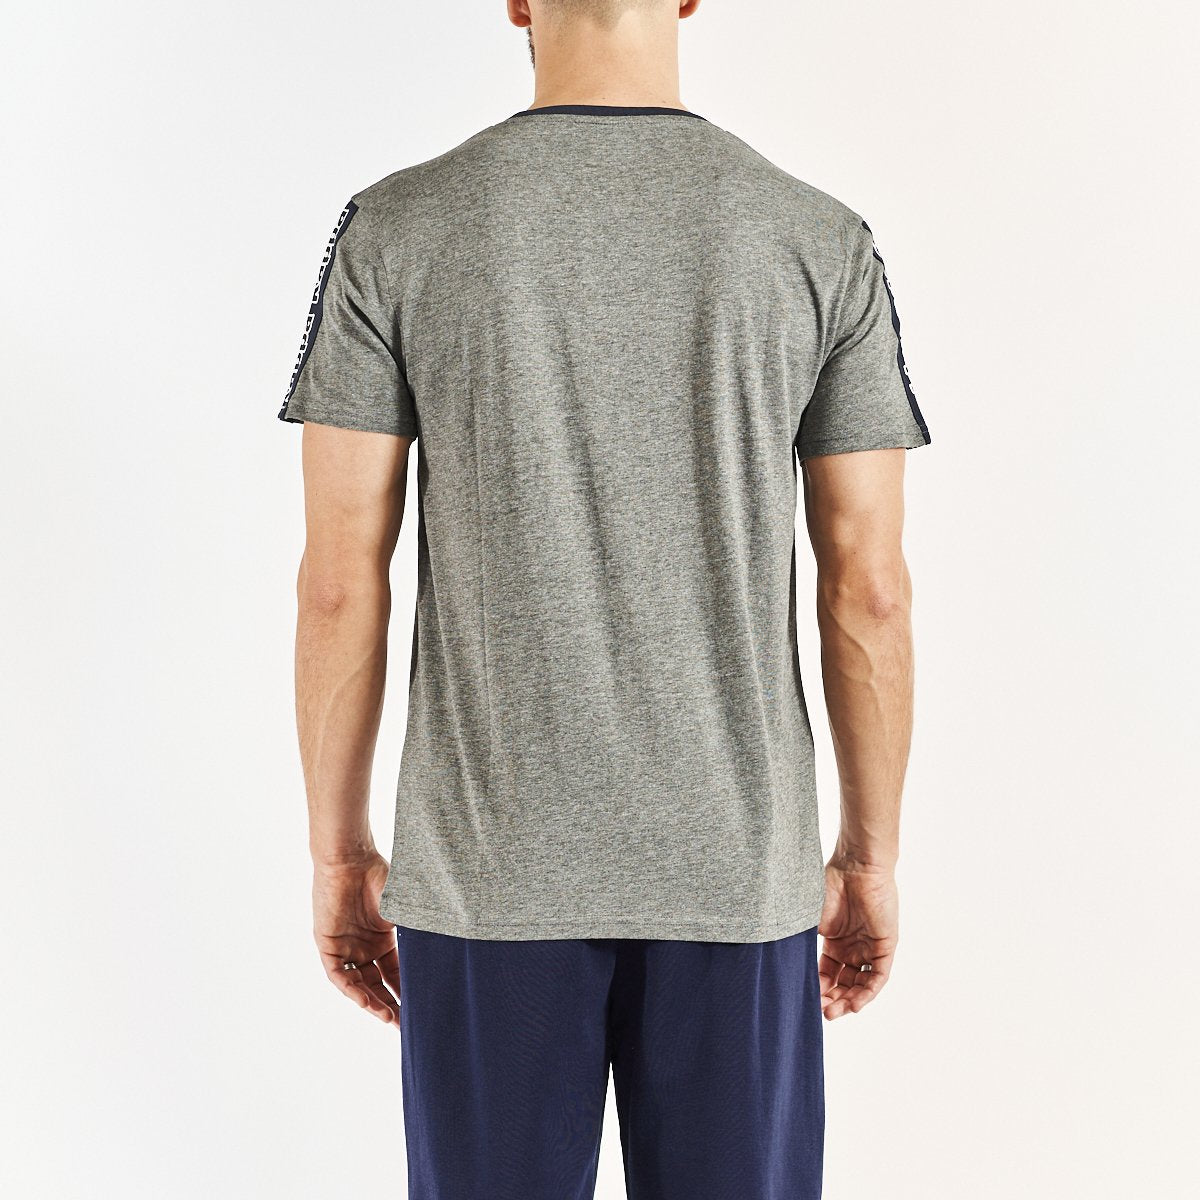 Camiseta Itap hombre gris - Imagen 3